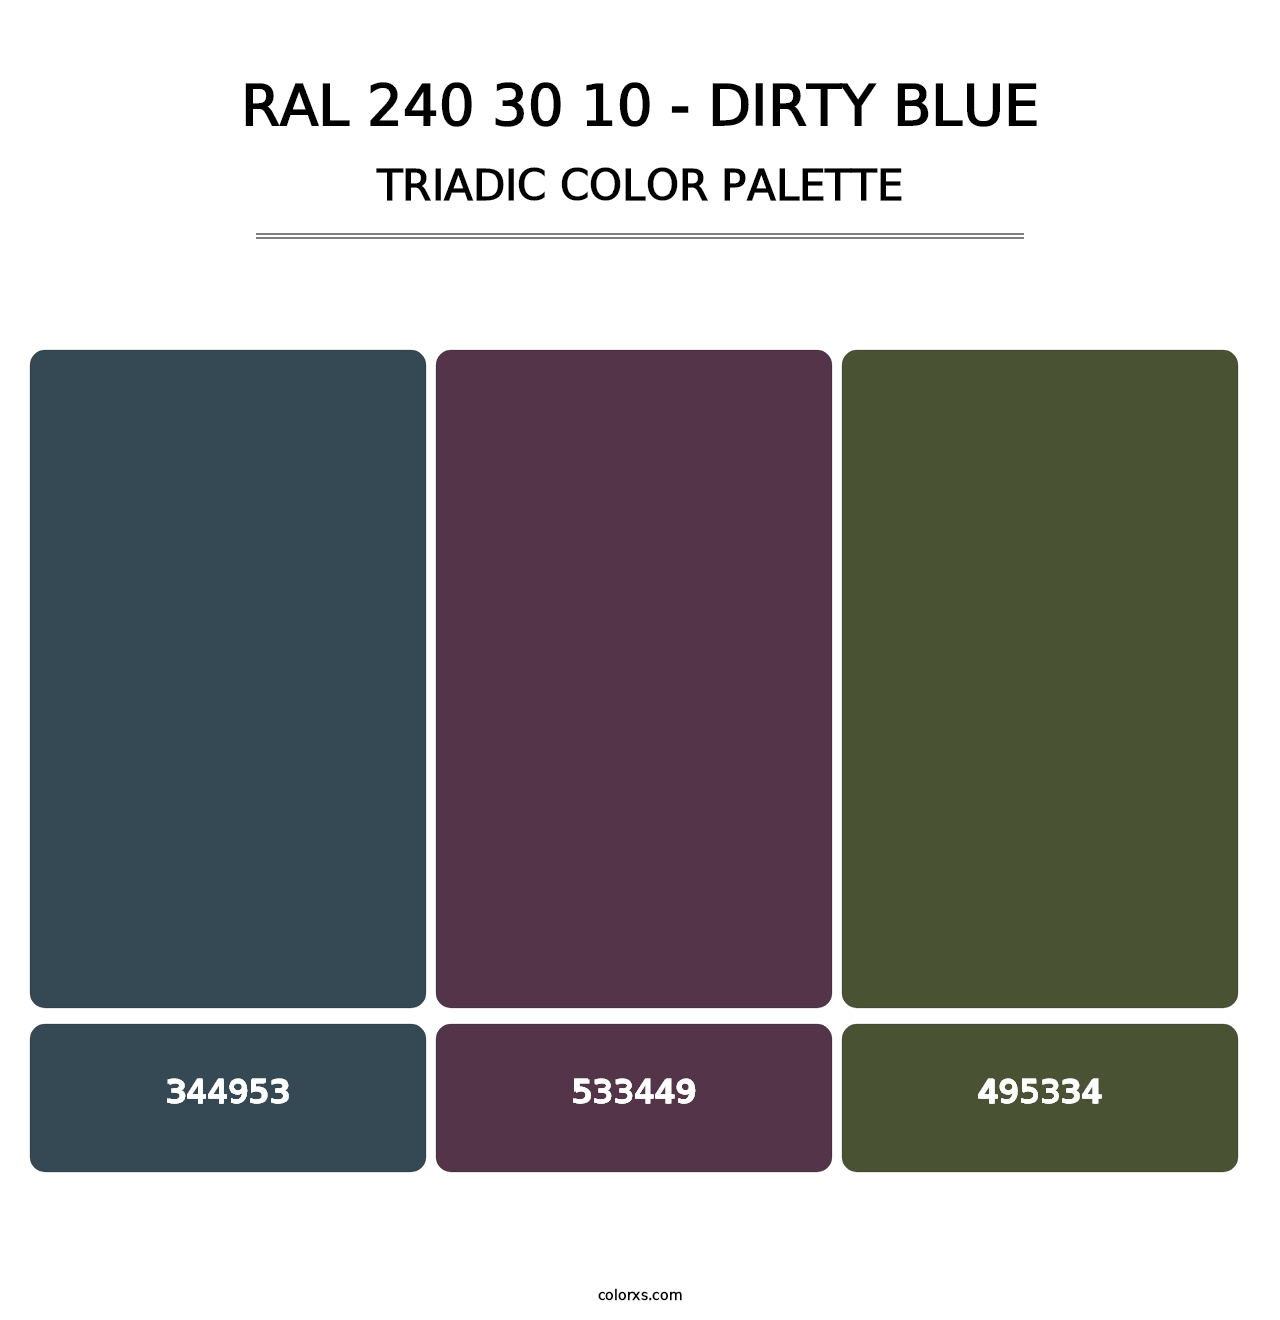 RAL 240 30 10 - Dirty Blue - Triadic Color Palette